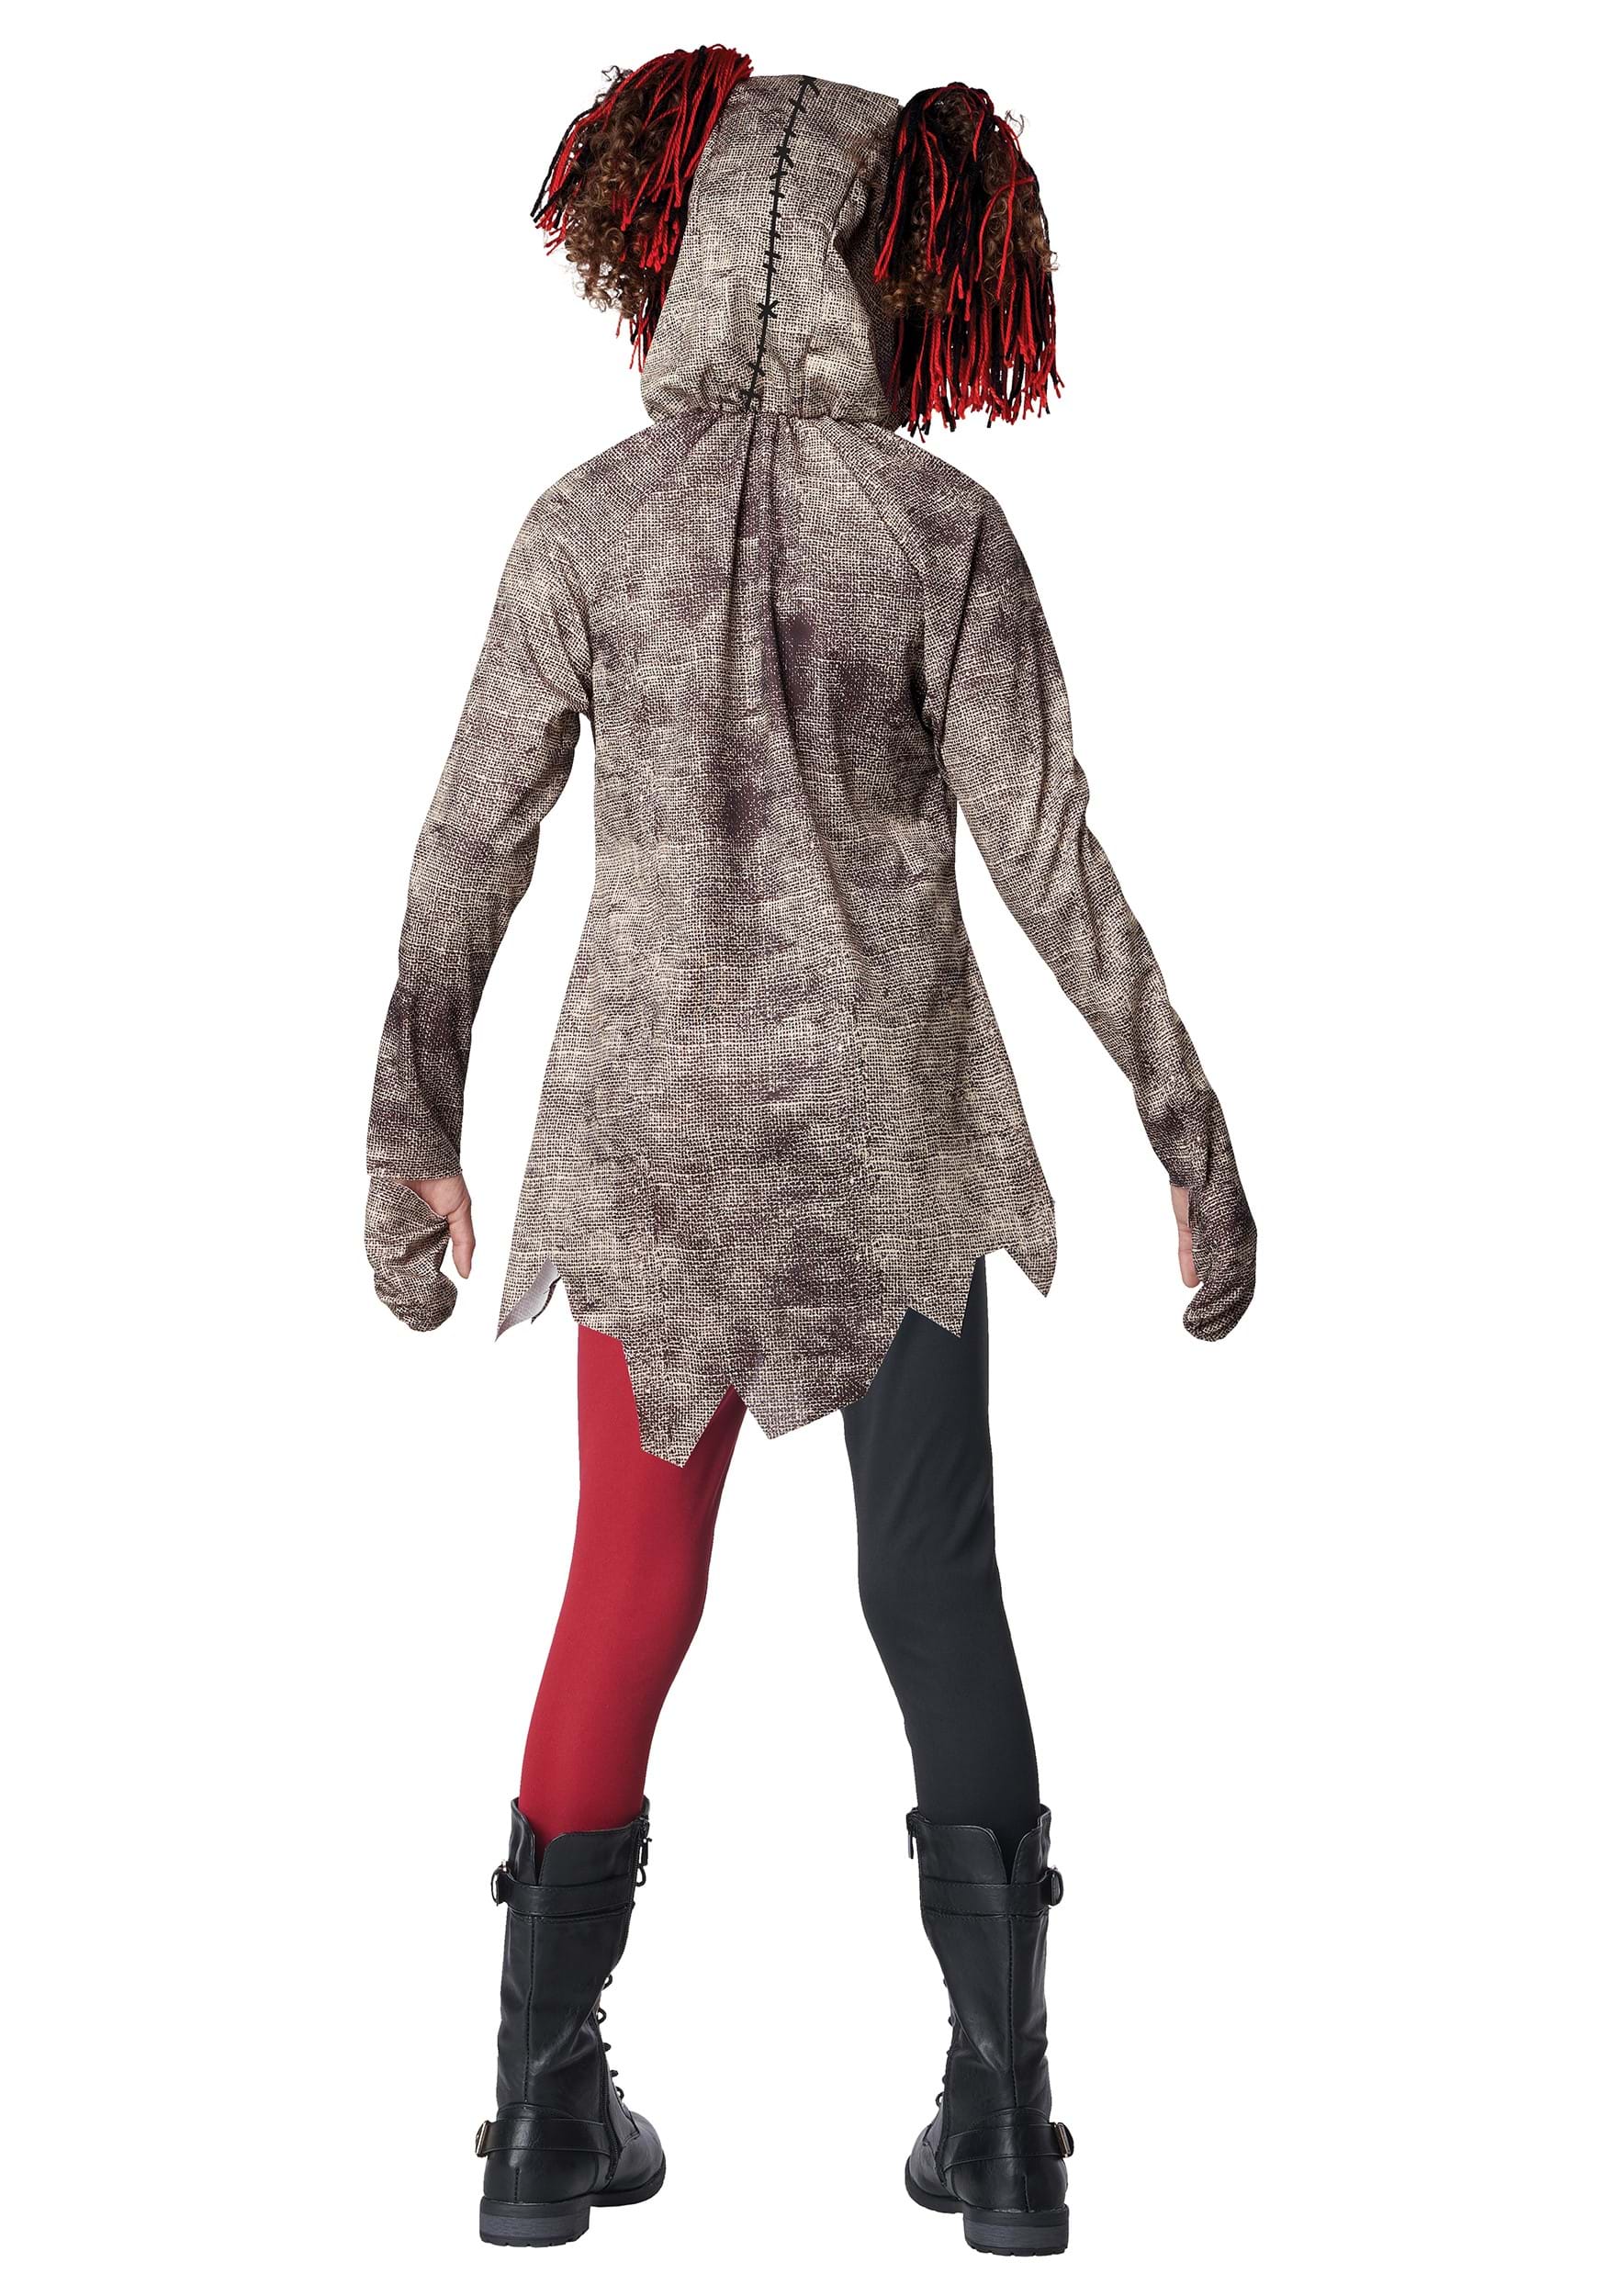 Voodoo Tunic Dress Girl's Costume